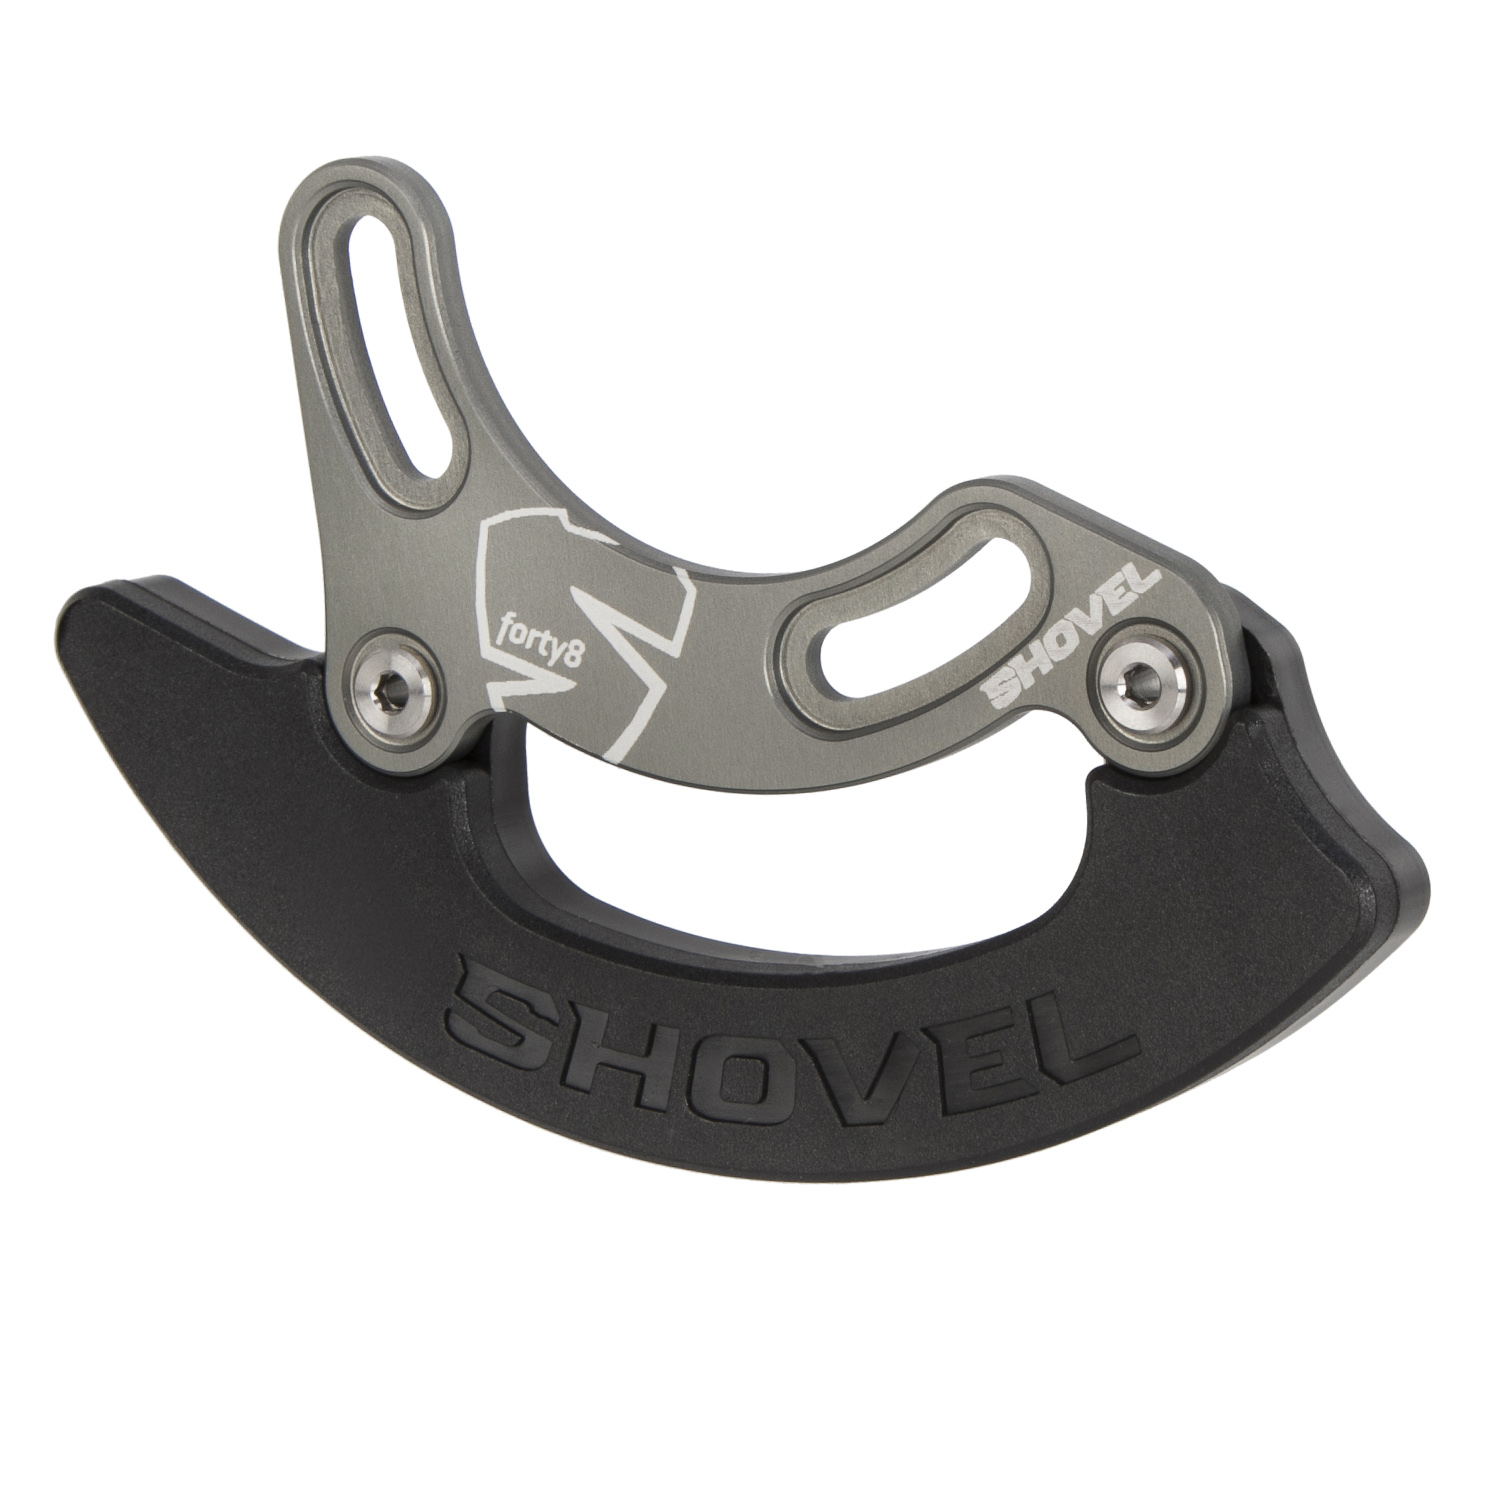 Shovel Chain Guide Forty8 Titanium, 28-36 Teeth, ISCG05